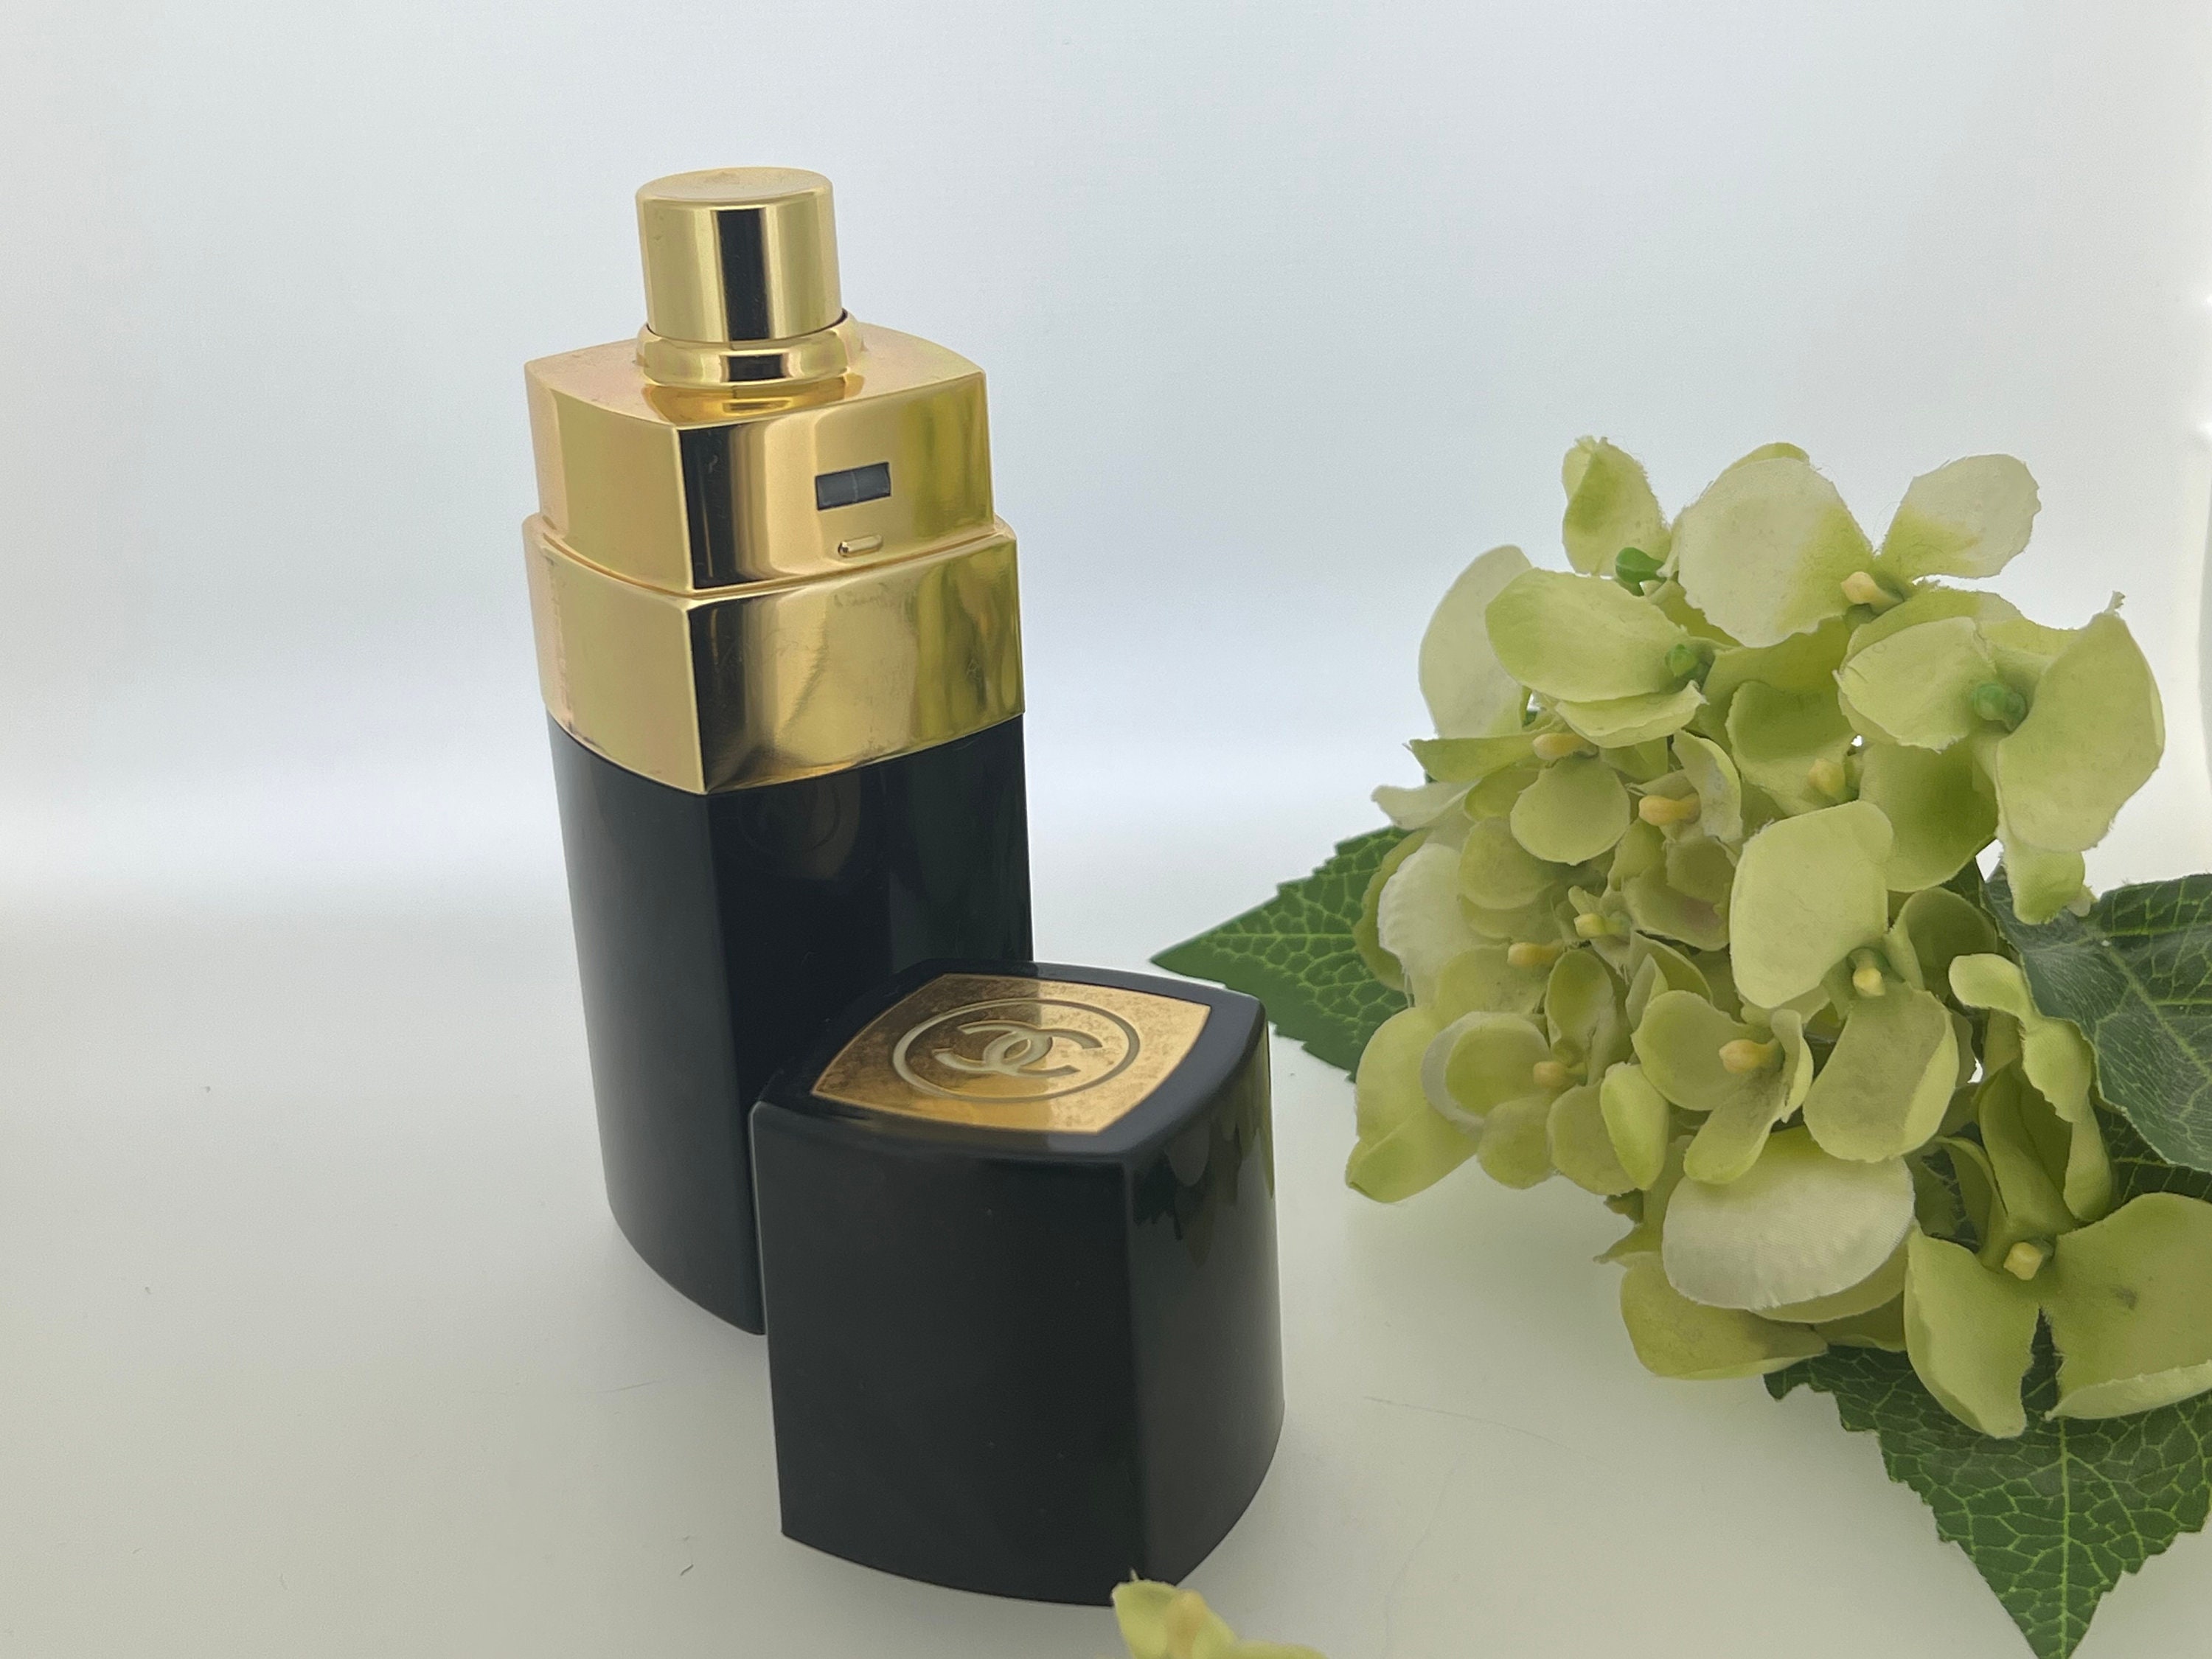 green perfume chanel 5